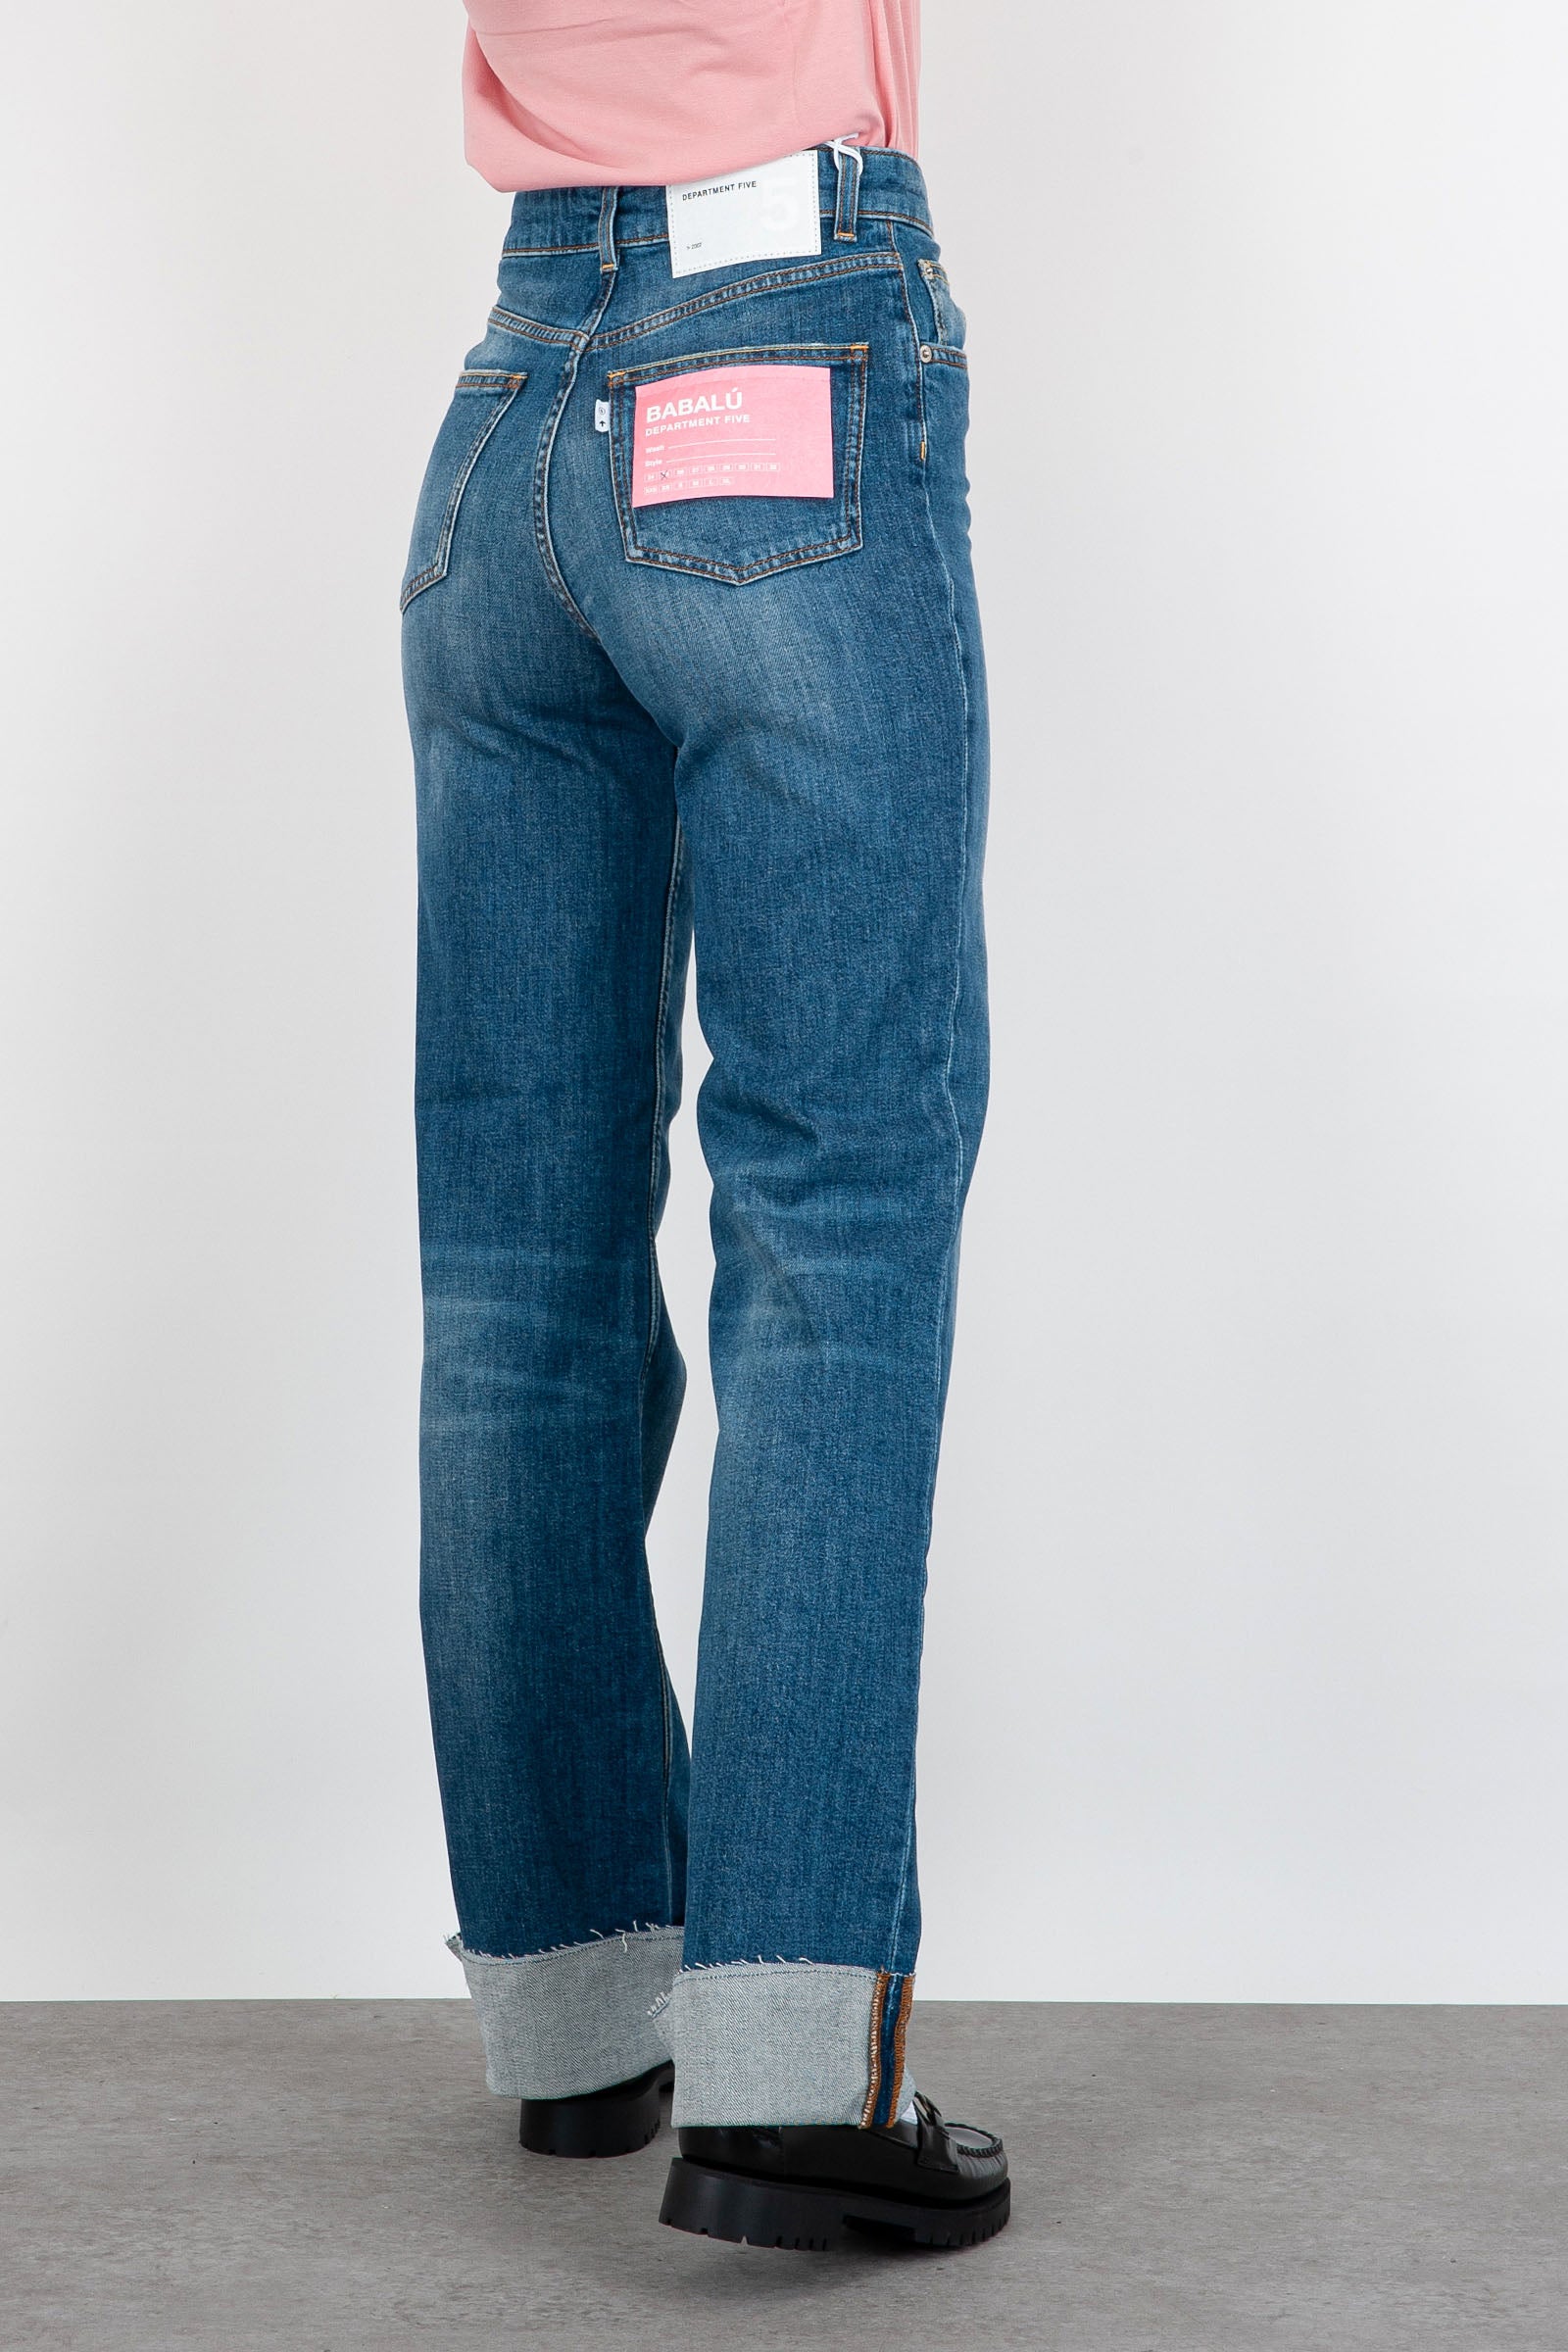 Babalu Medium Blue Jeans Women - 3